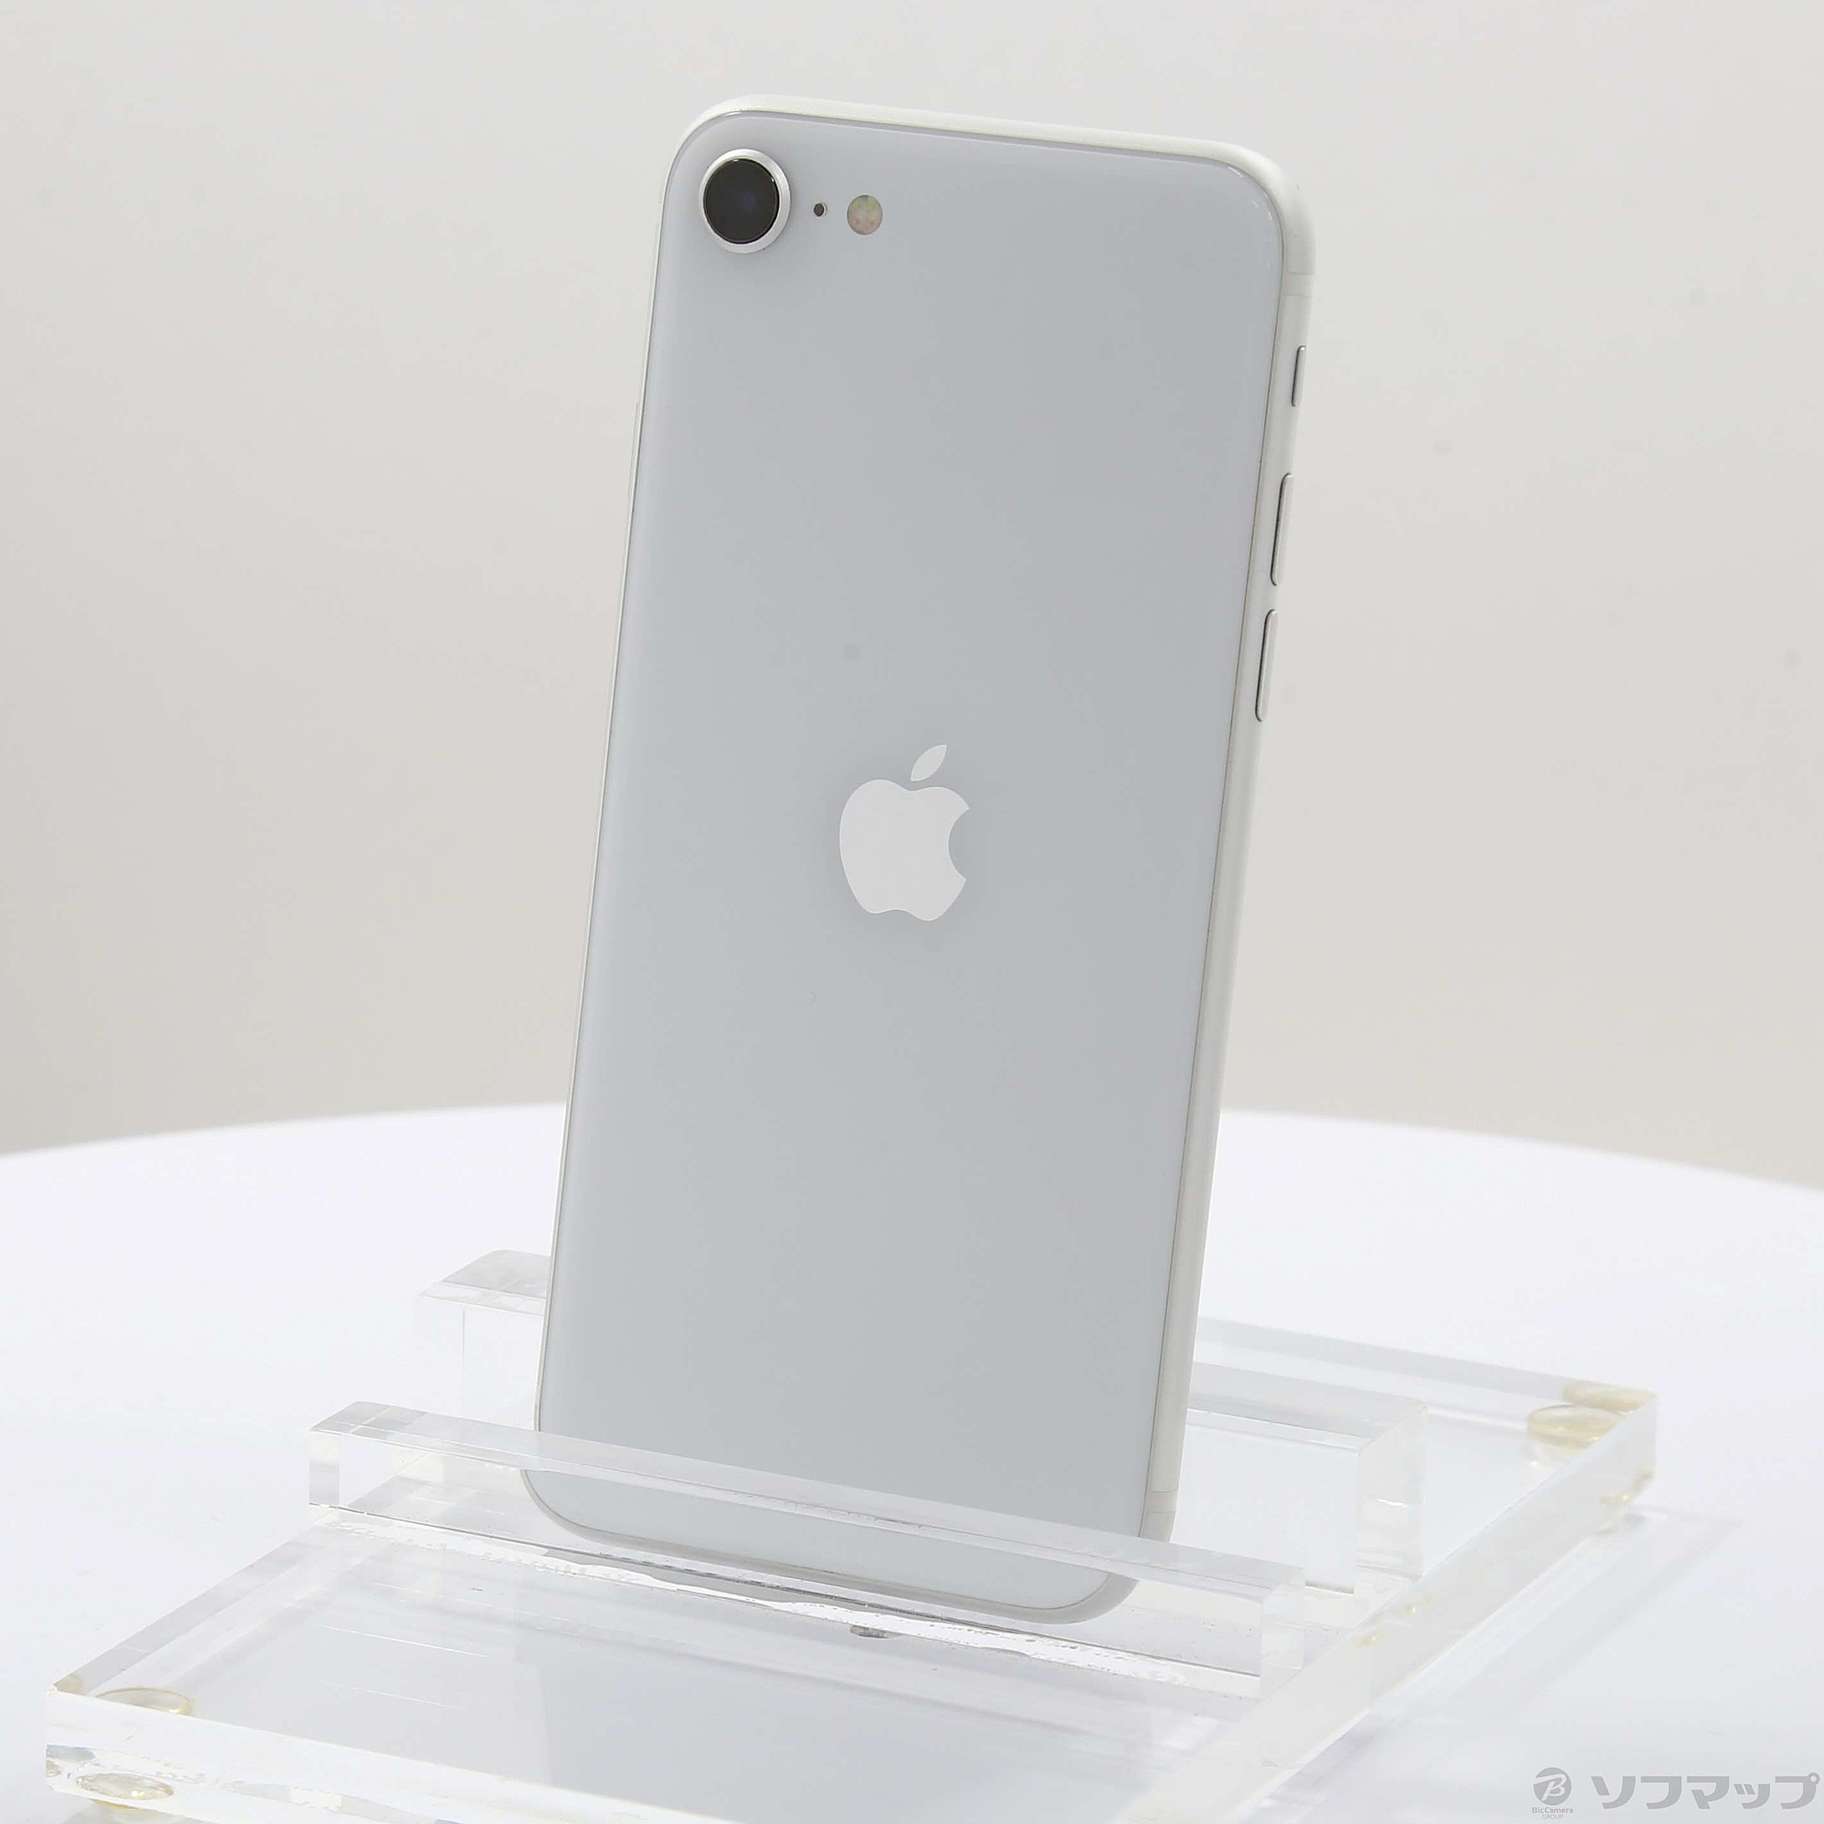 iPhone SE (第2世代) 128GB SIMフリー [ホワイト] 中古(白ロム)価格 ...